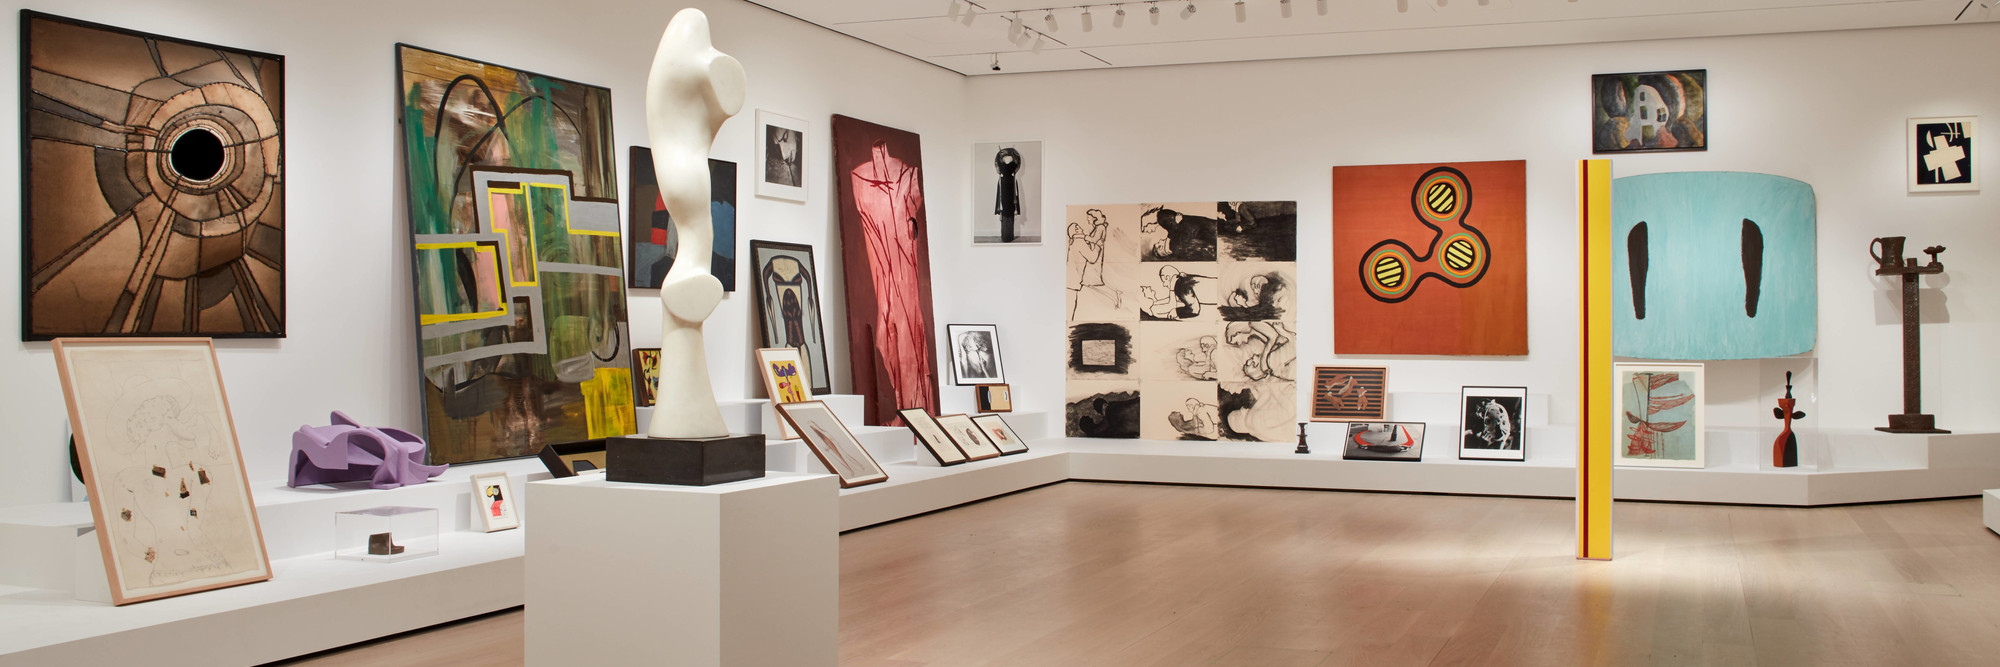 Installation view of Artist’s Choice: Amy Sillman—The Shape of Shape, The Museum of Modern Art, New York, October 21, 2019–April 12, 2020. © 2020 The Museum of Modern Art. Photo: Heidi Bohnenkamp